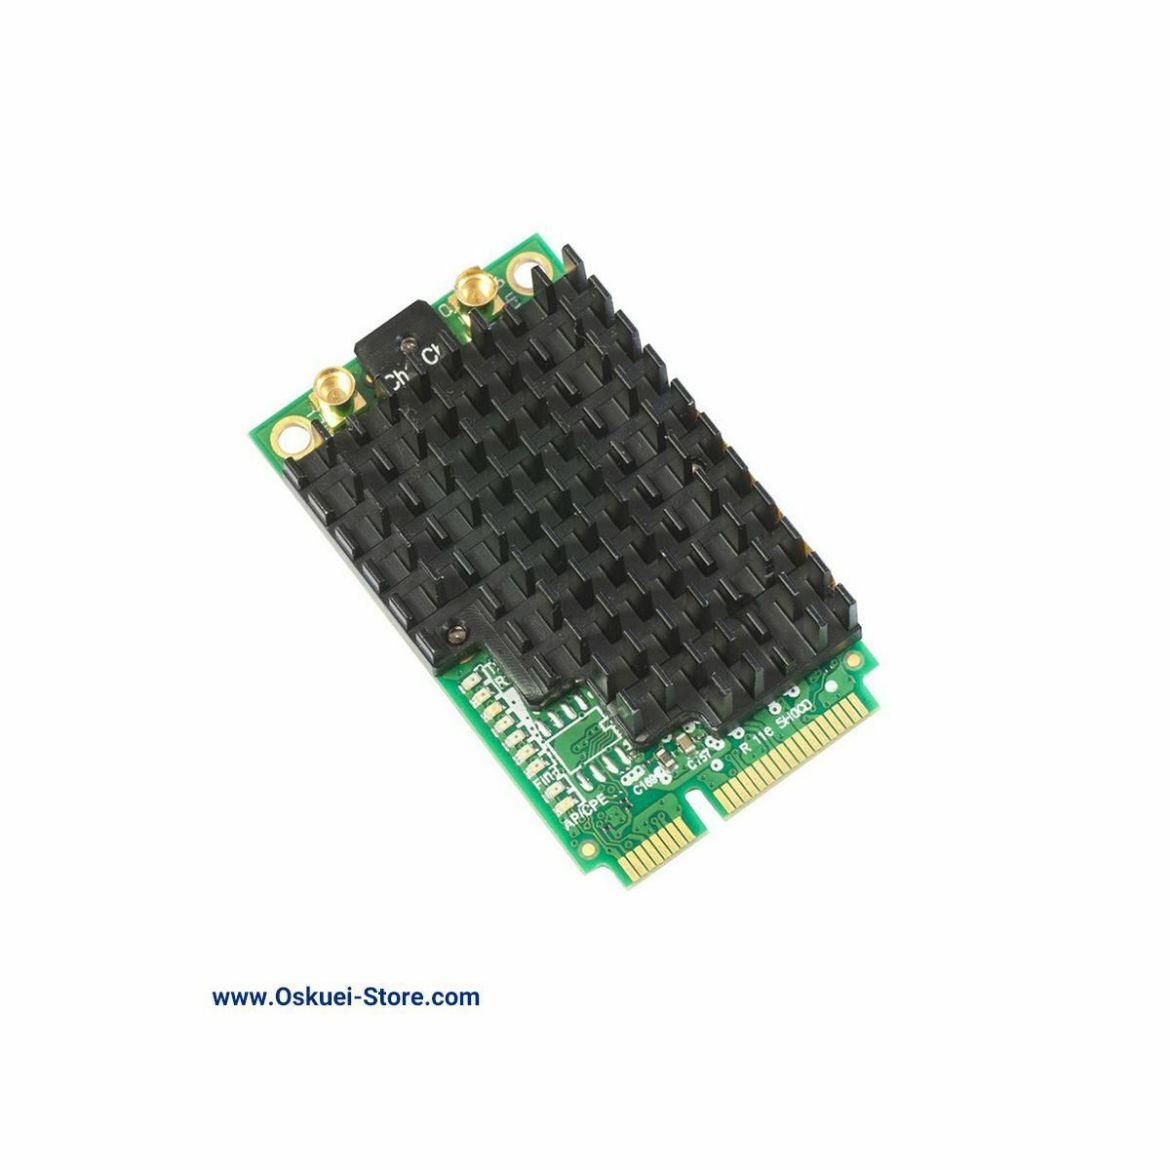 MikroTik R11e-2HnD MIni PCIe WIreless Card